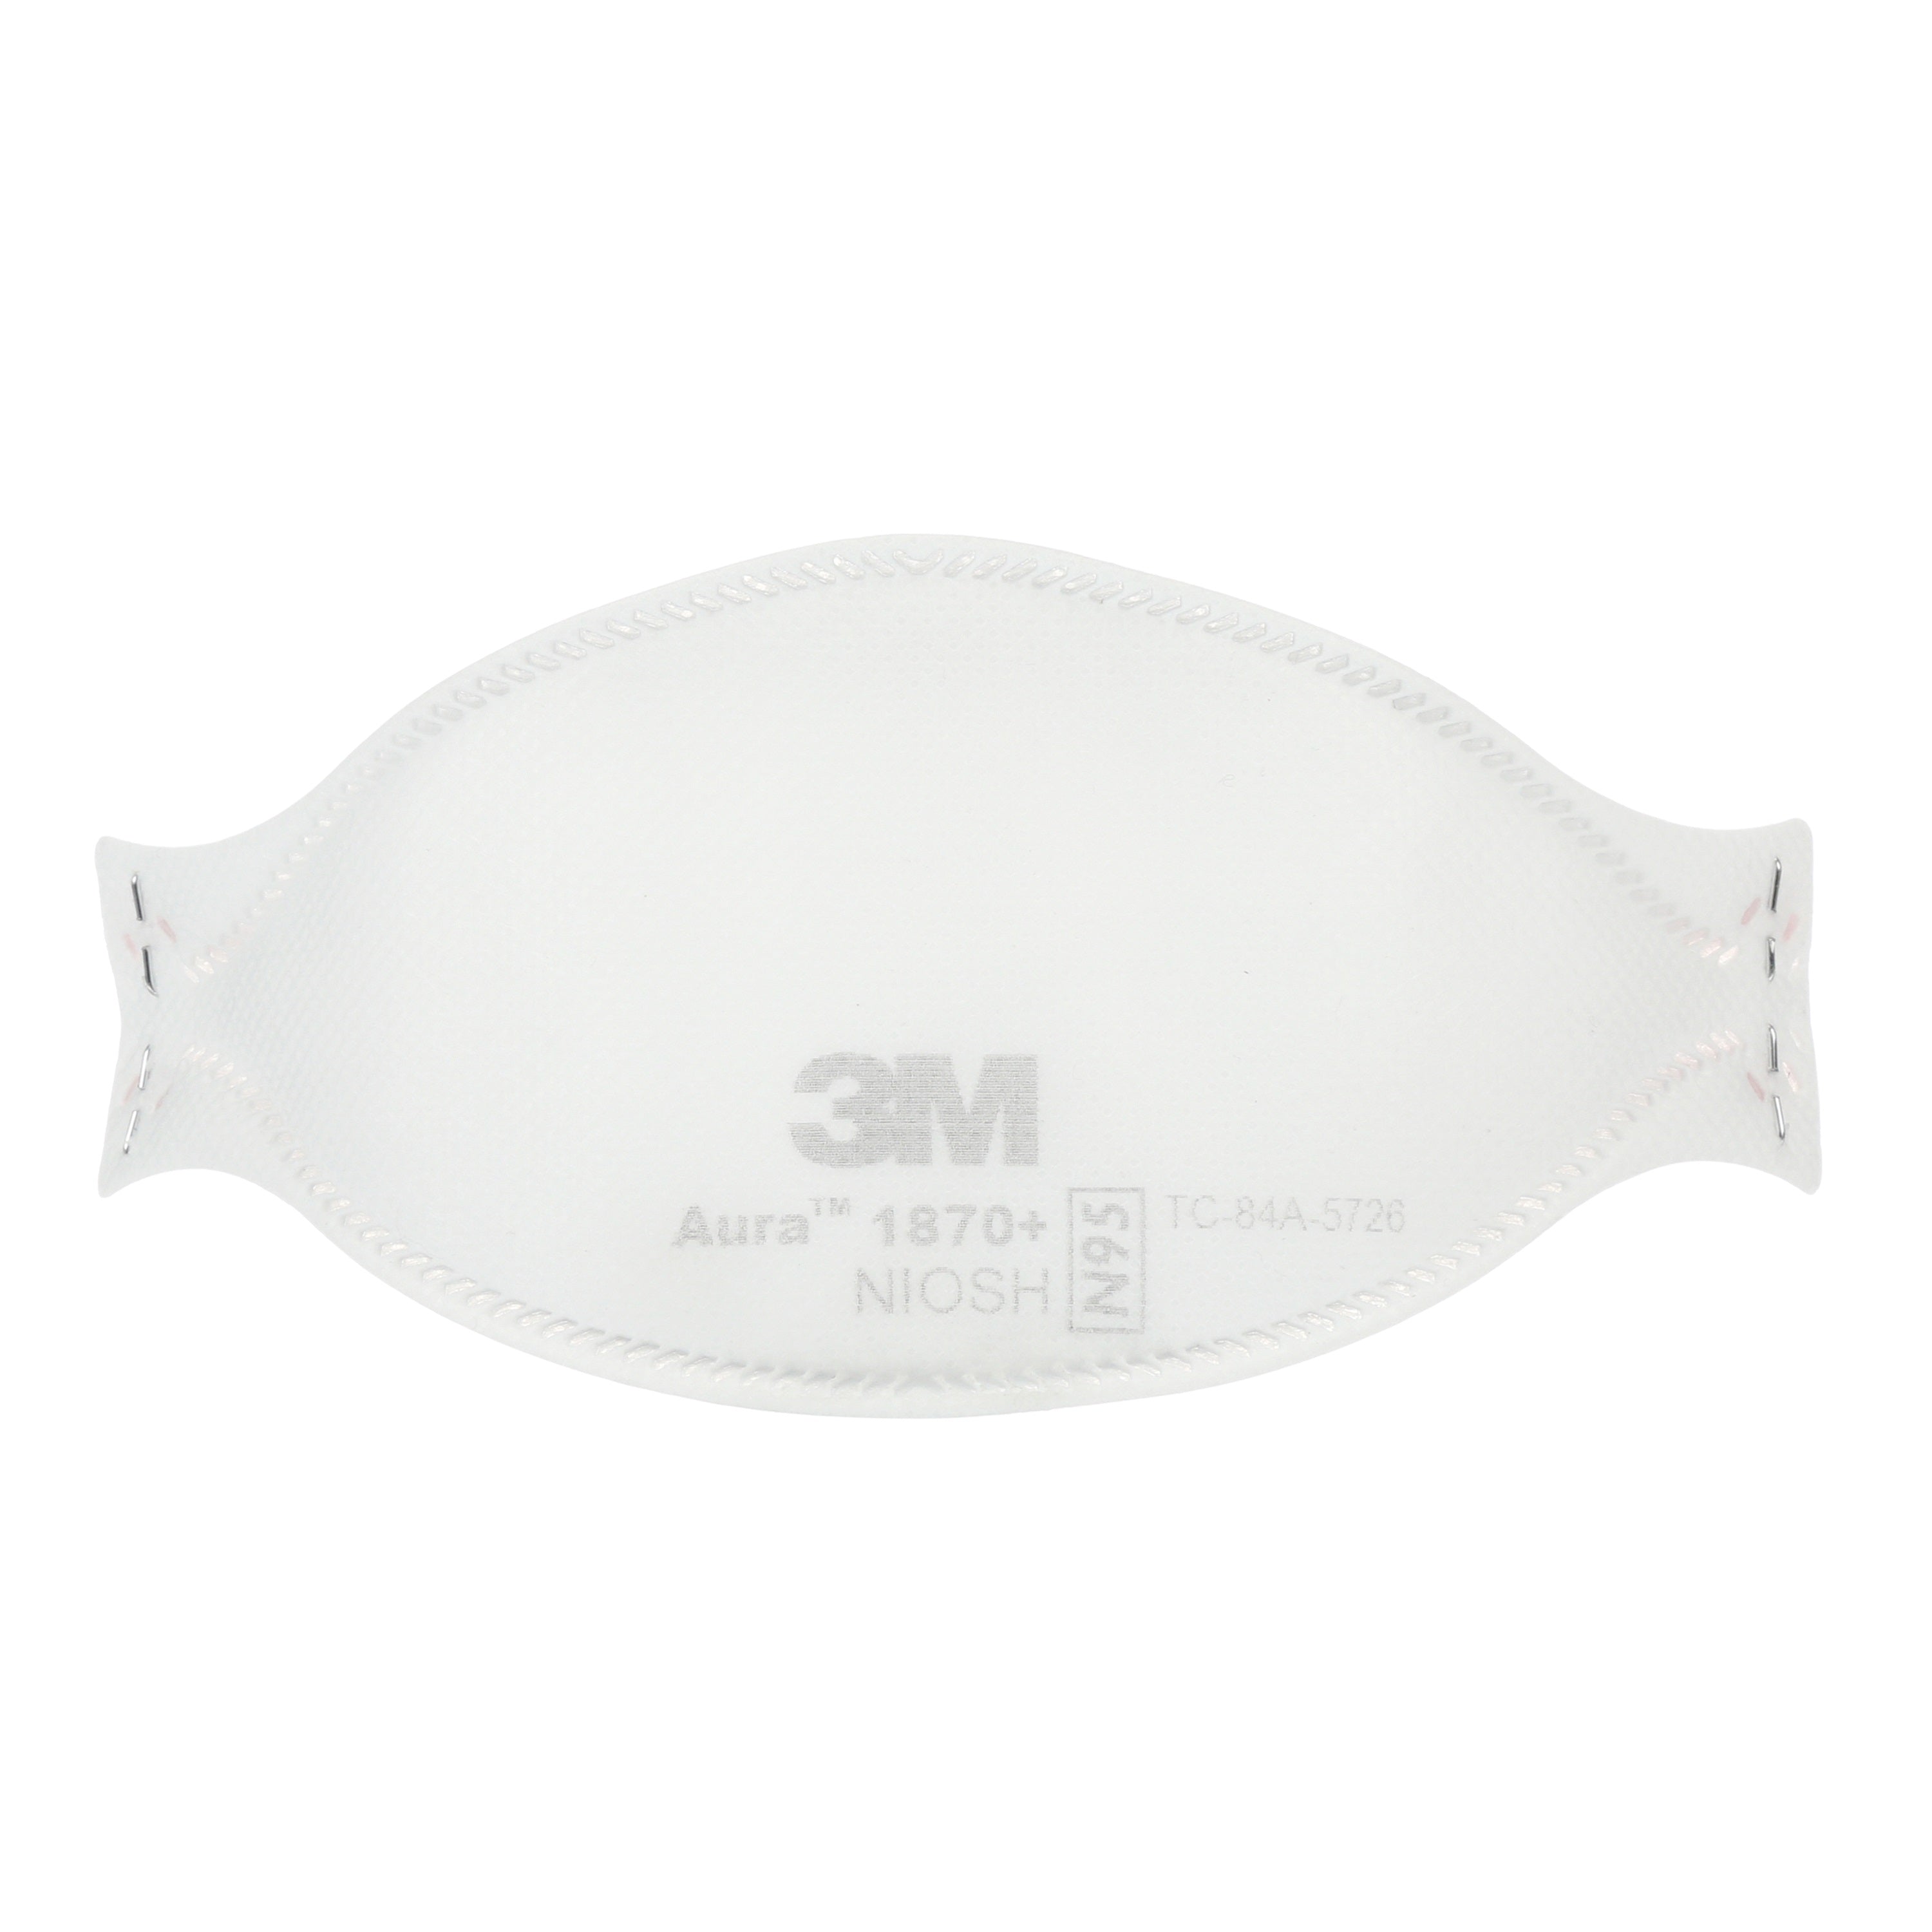 3M Aura 1870+ NIOSH N95 Healthcare Respirator Mask - Made in Canada/USA